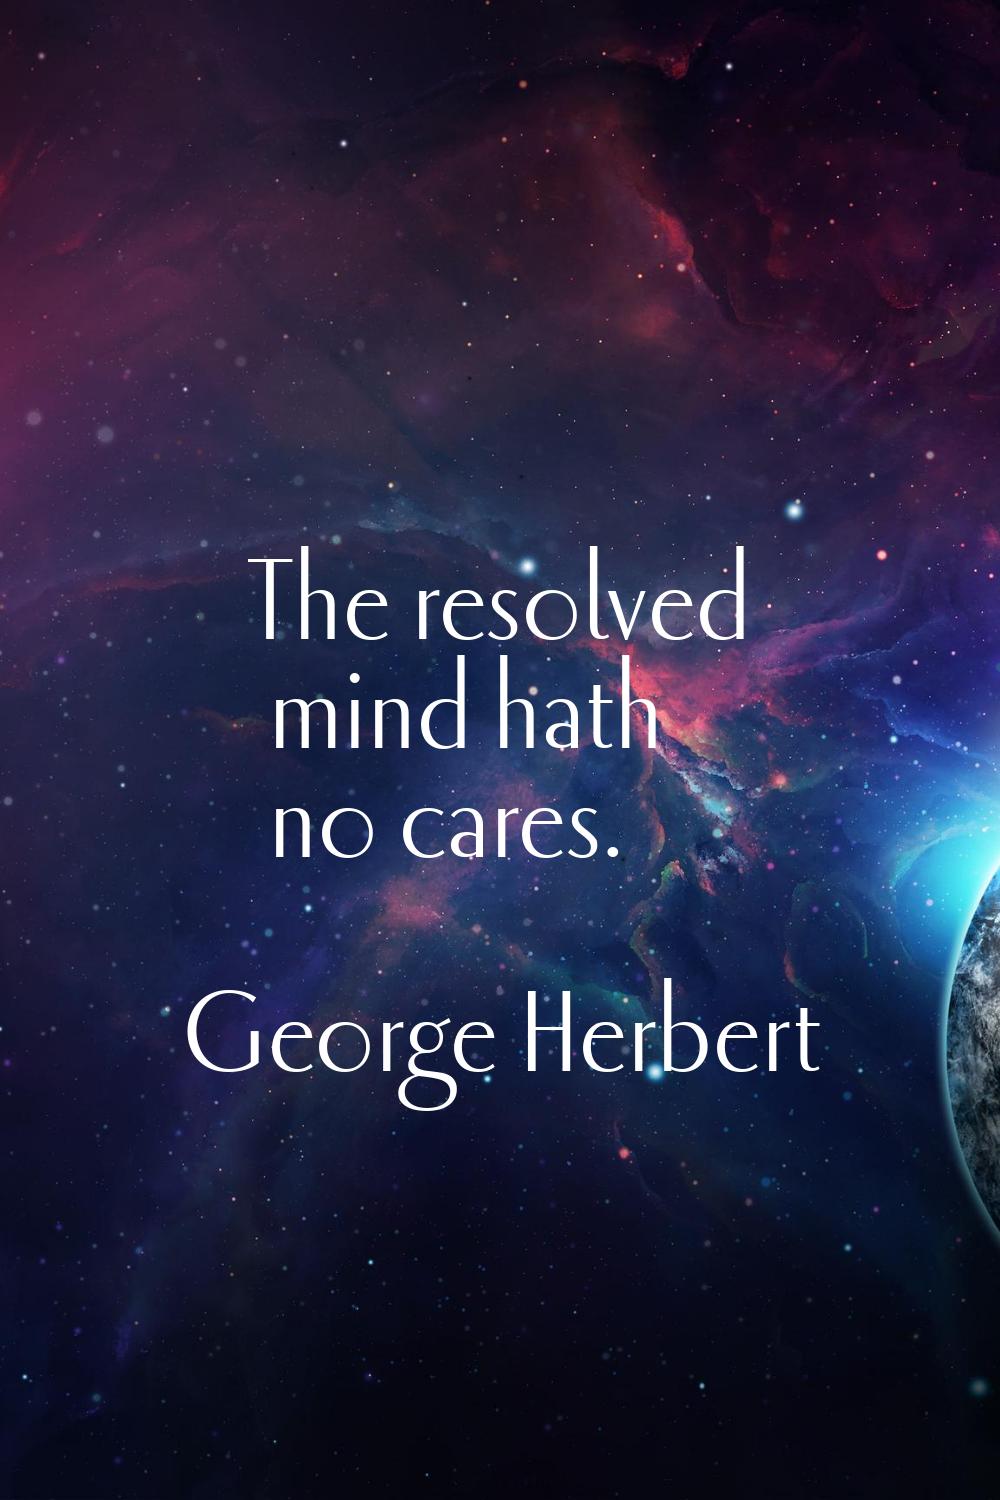 The resolved mind hath no cares.